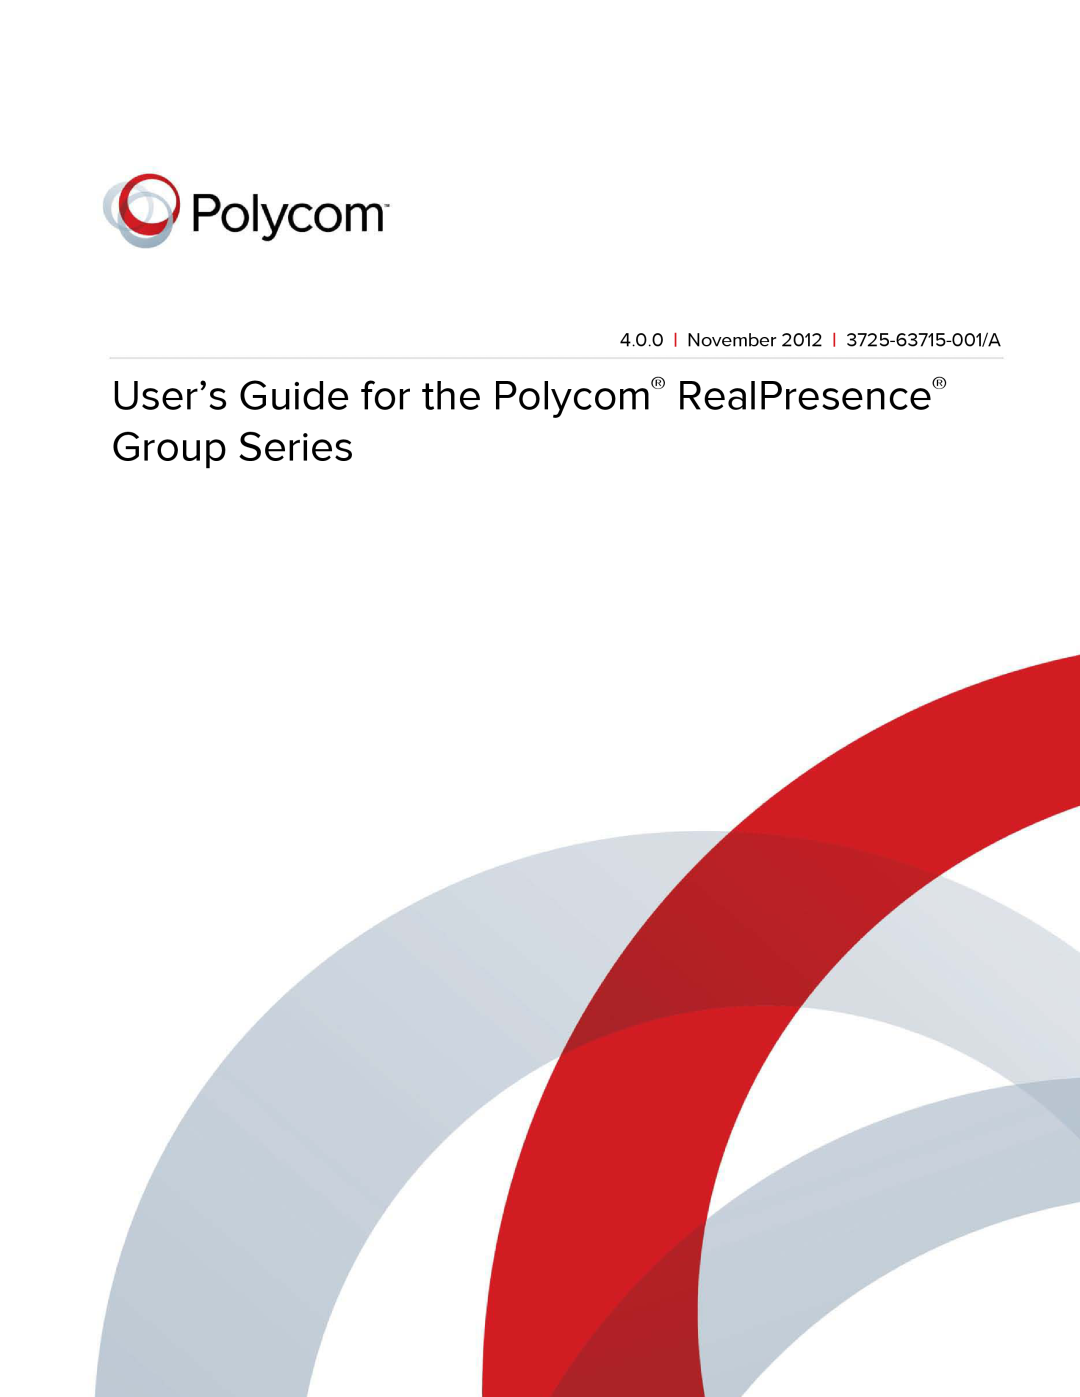 Polycom P001 manual User’s Guide for the Polycom RealPresence Group Series, November 2012 3725-63715-001/A 